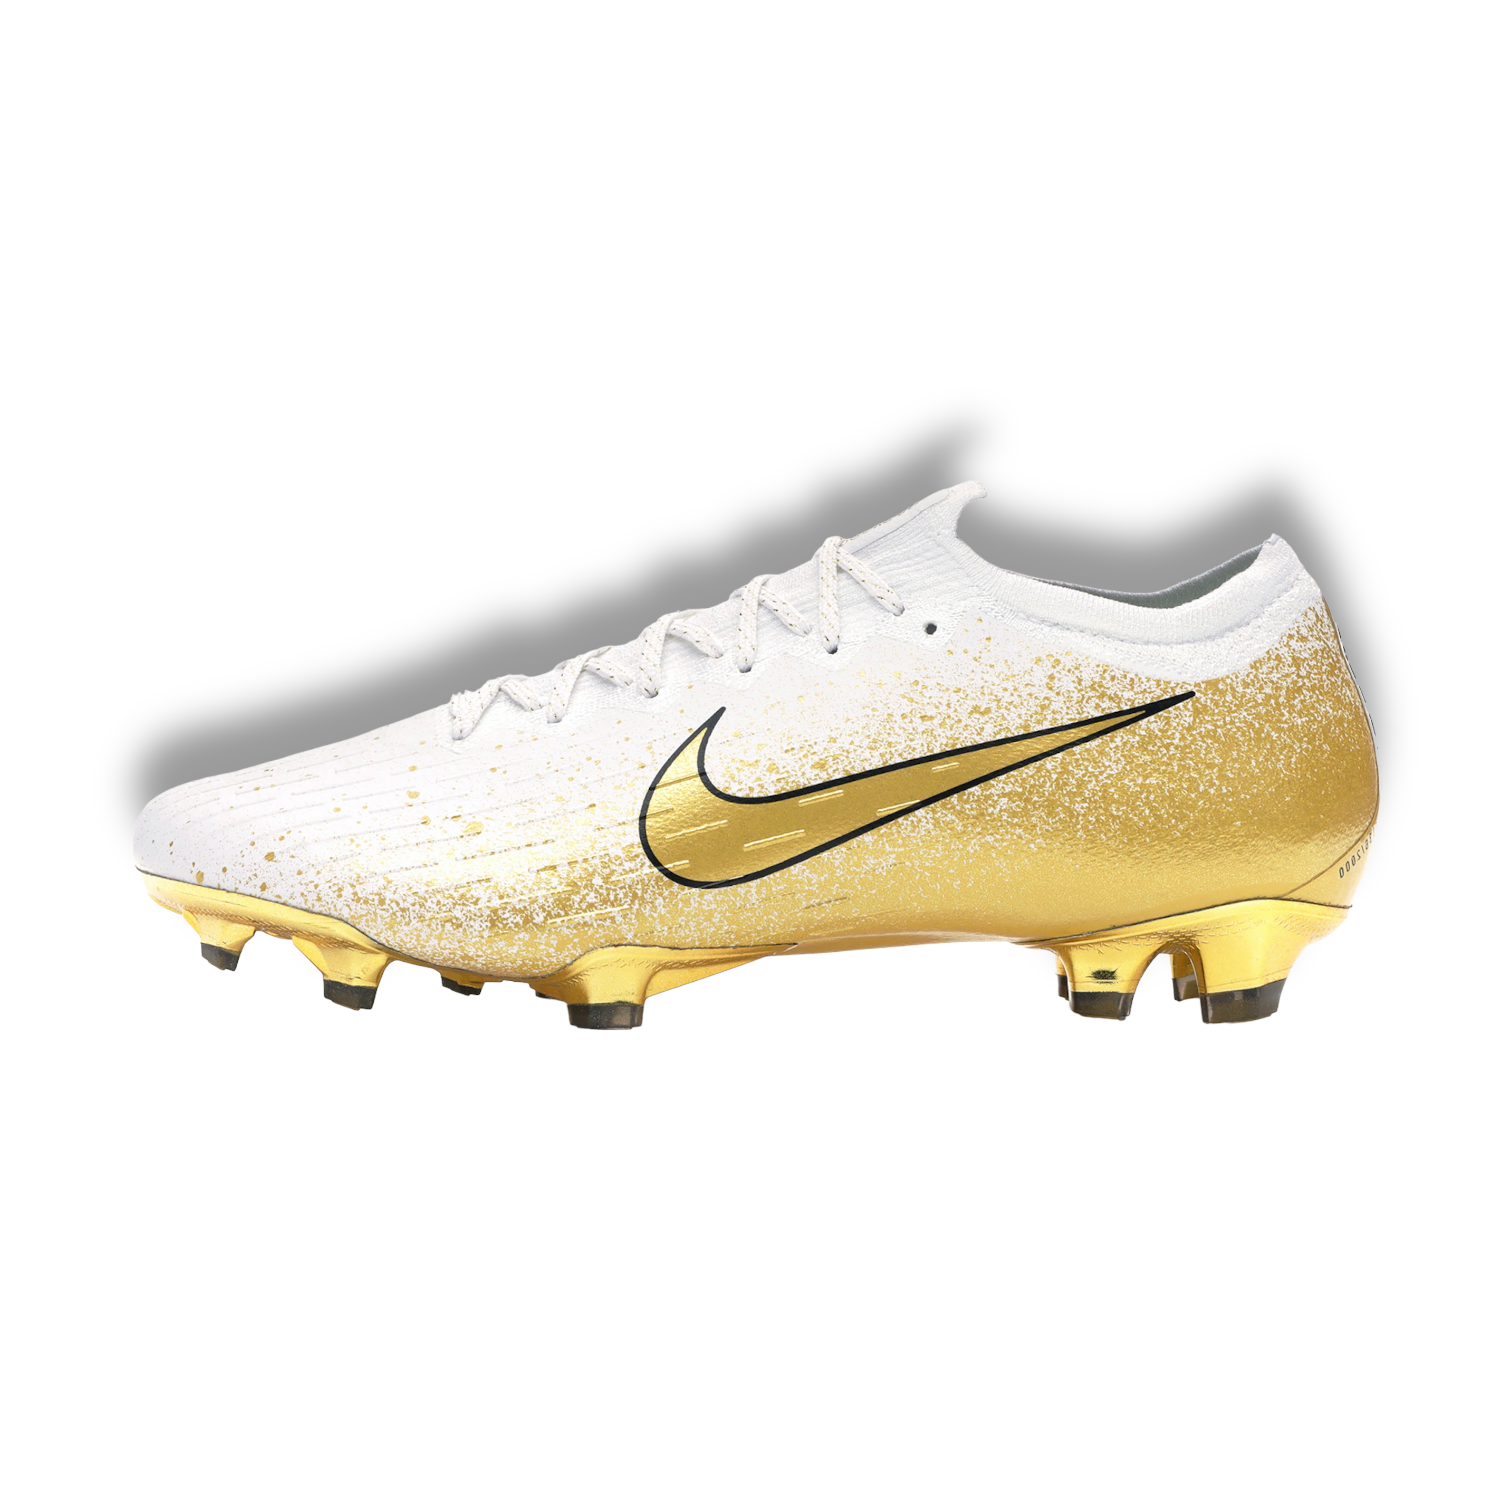 Nike 12 SE gold